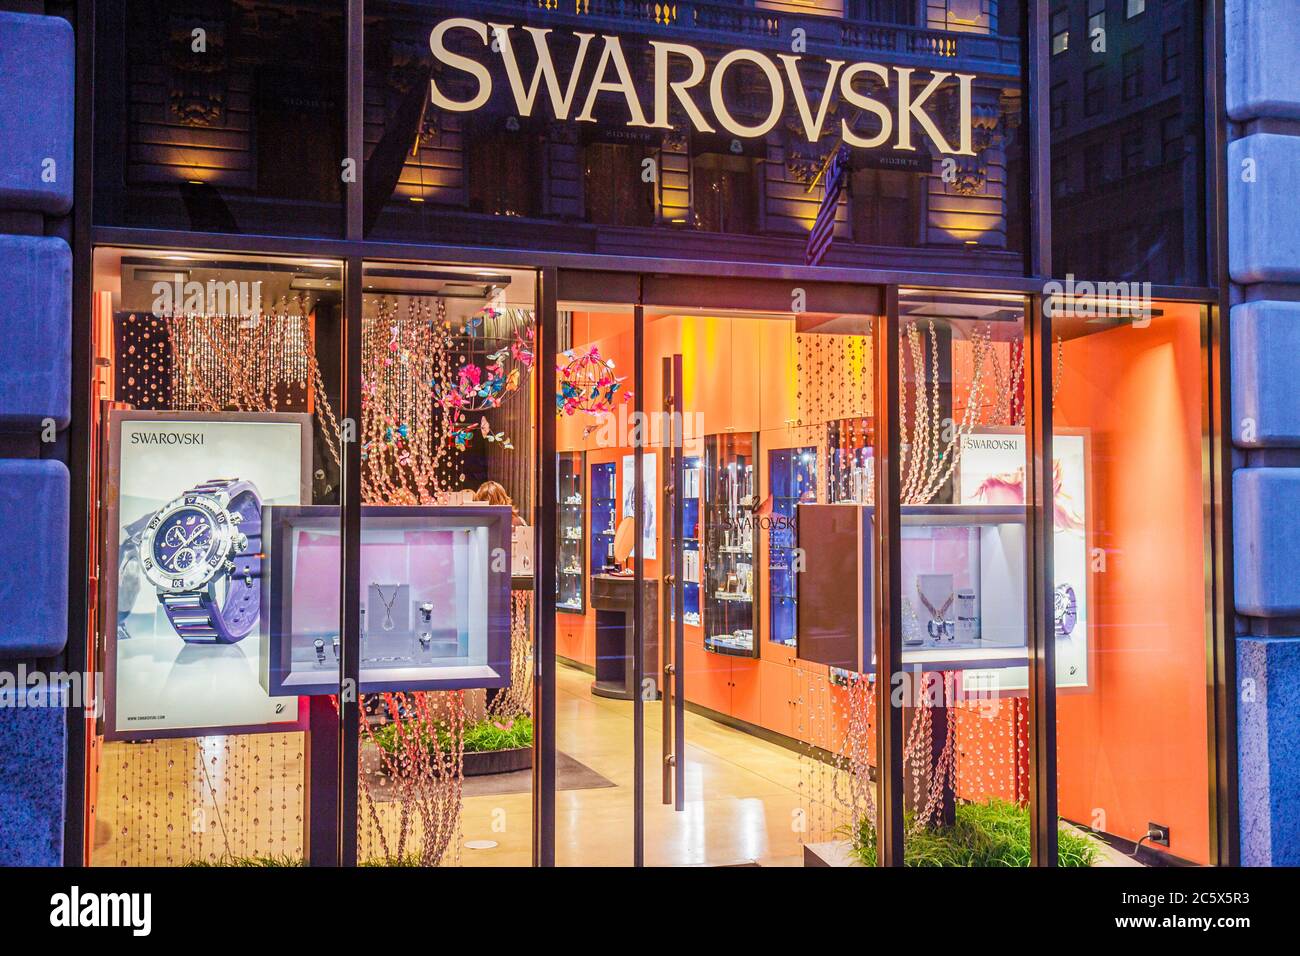 Swarovski Crystal New York High Resolution Stock Photography And Images Alamy